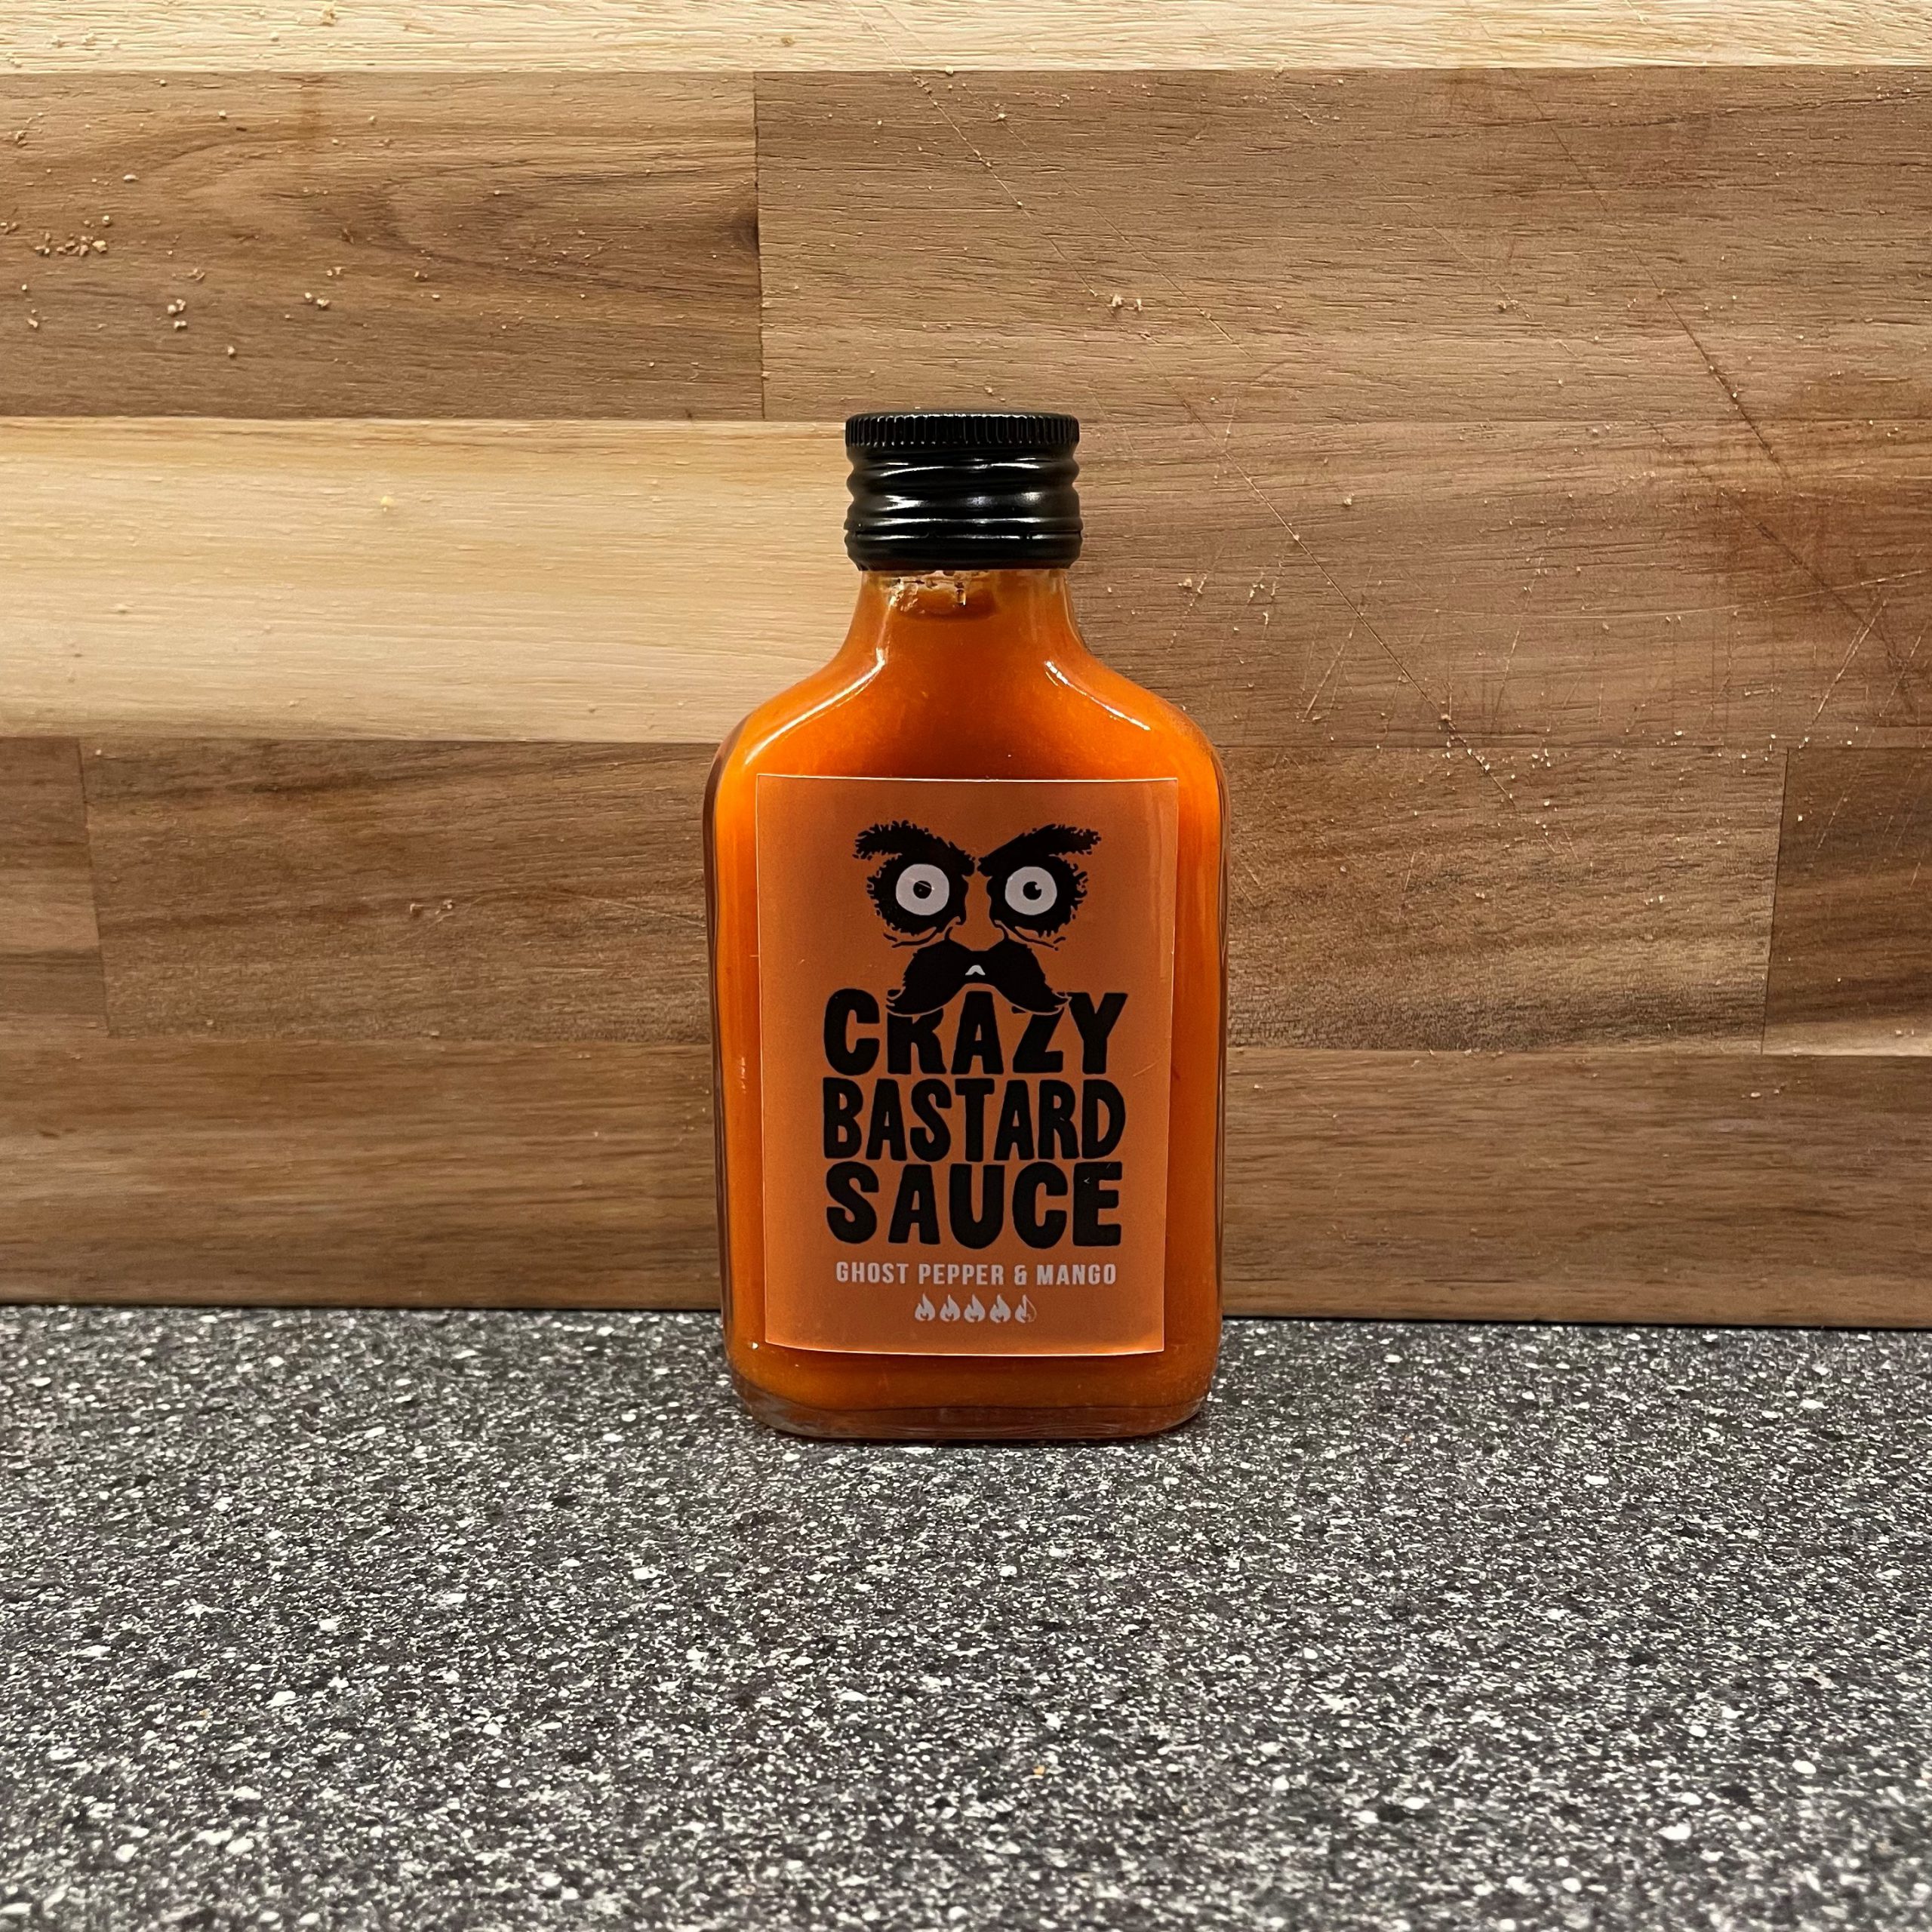 Crazy Bastard Sauce Ghost Pepper & Mango (Orange Label)